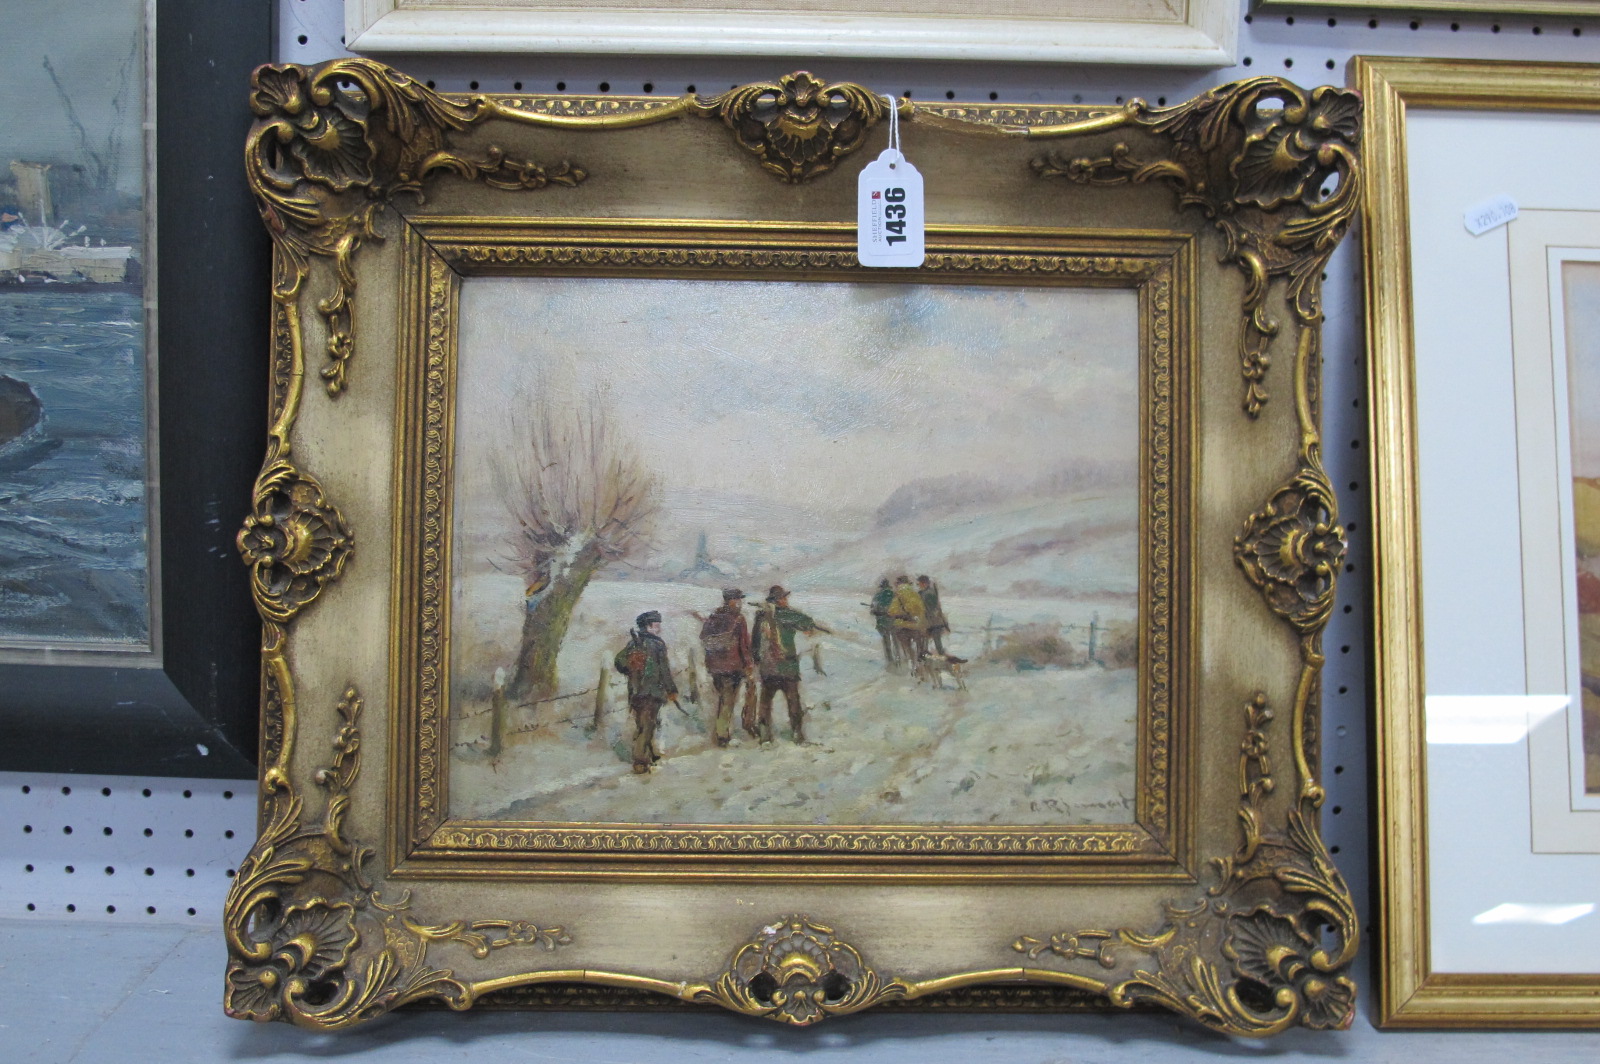 *ARR Adolf Rheiert (1879-1958), A Shooting Party in a Snowy Landscape, on the edge of a village, oil